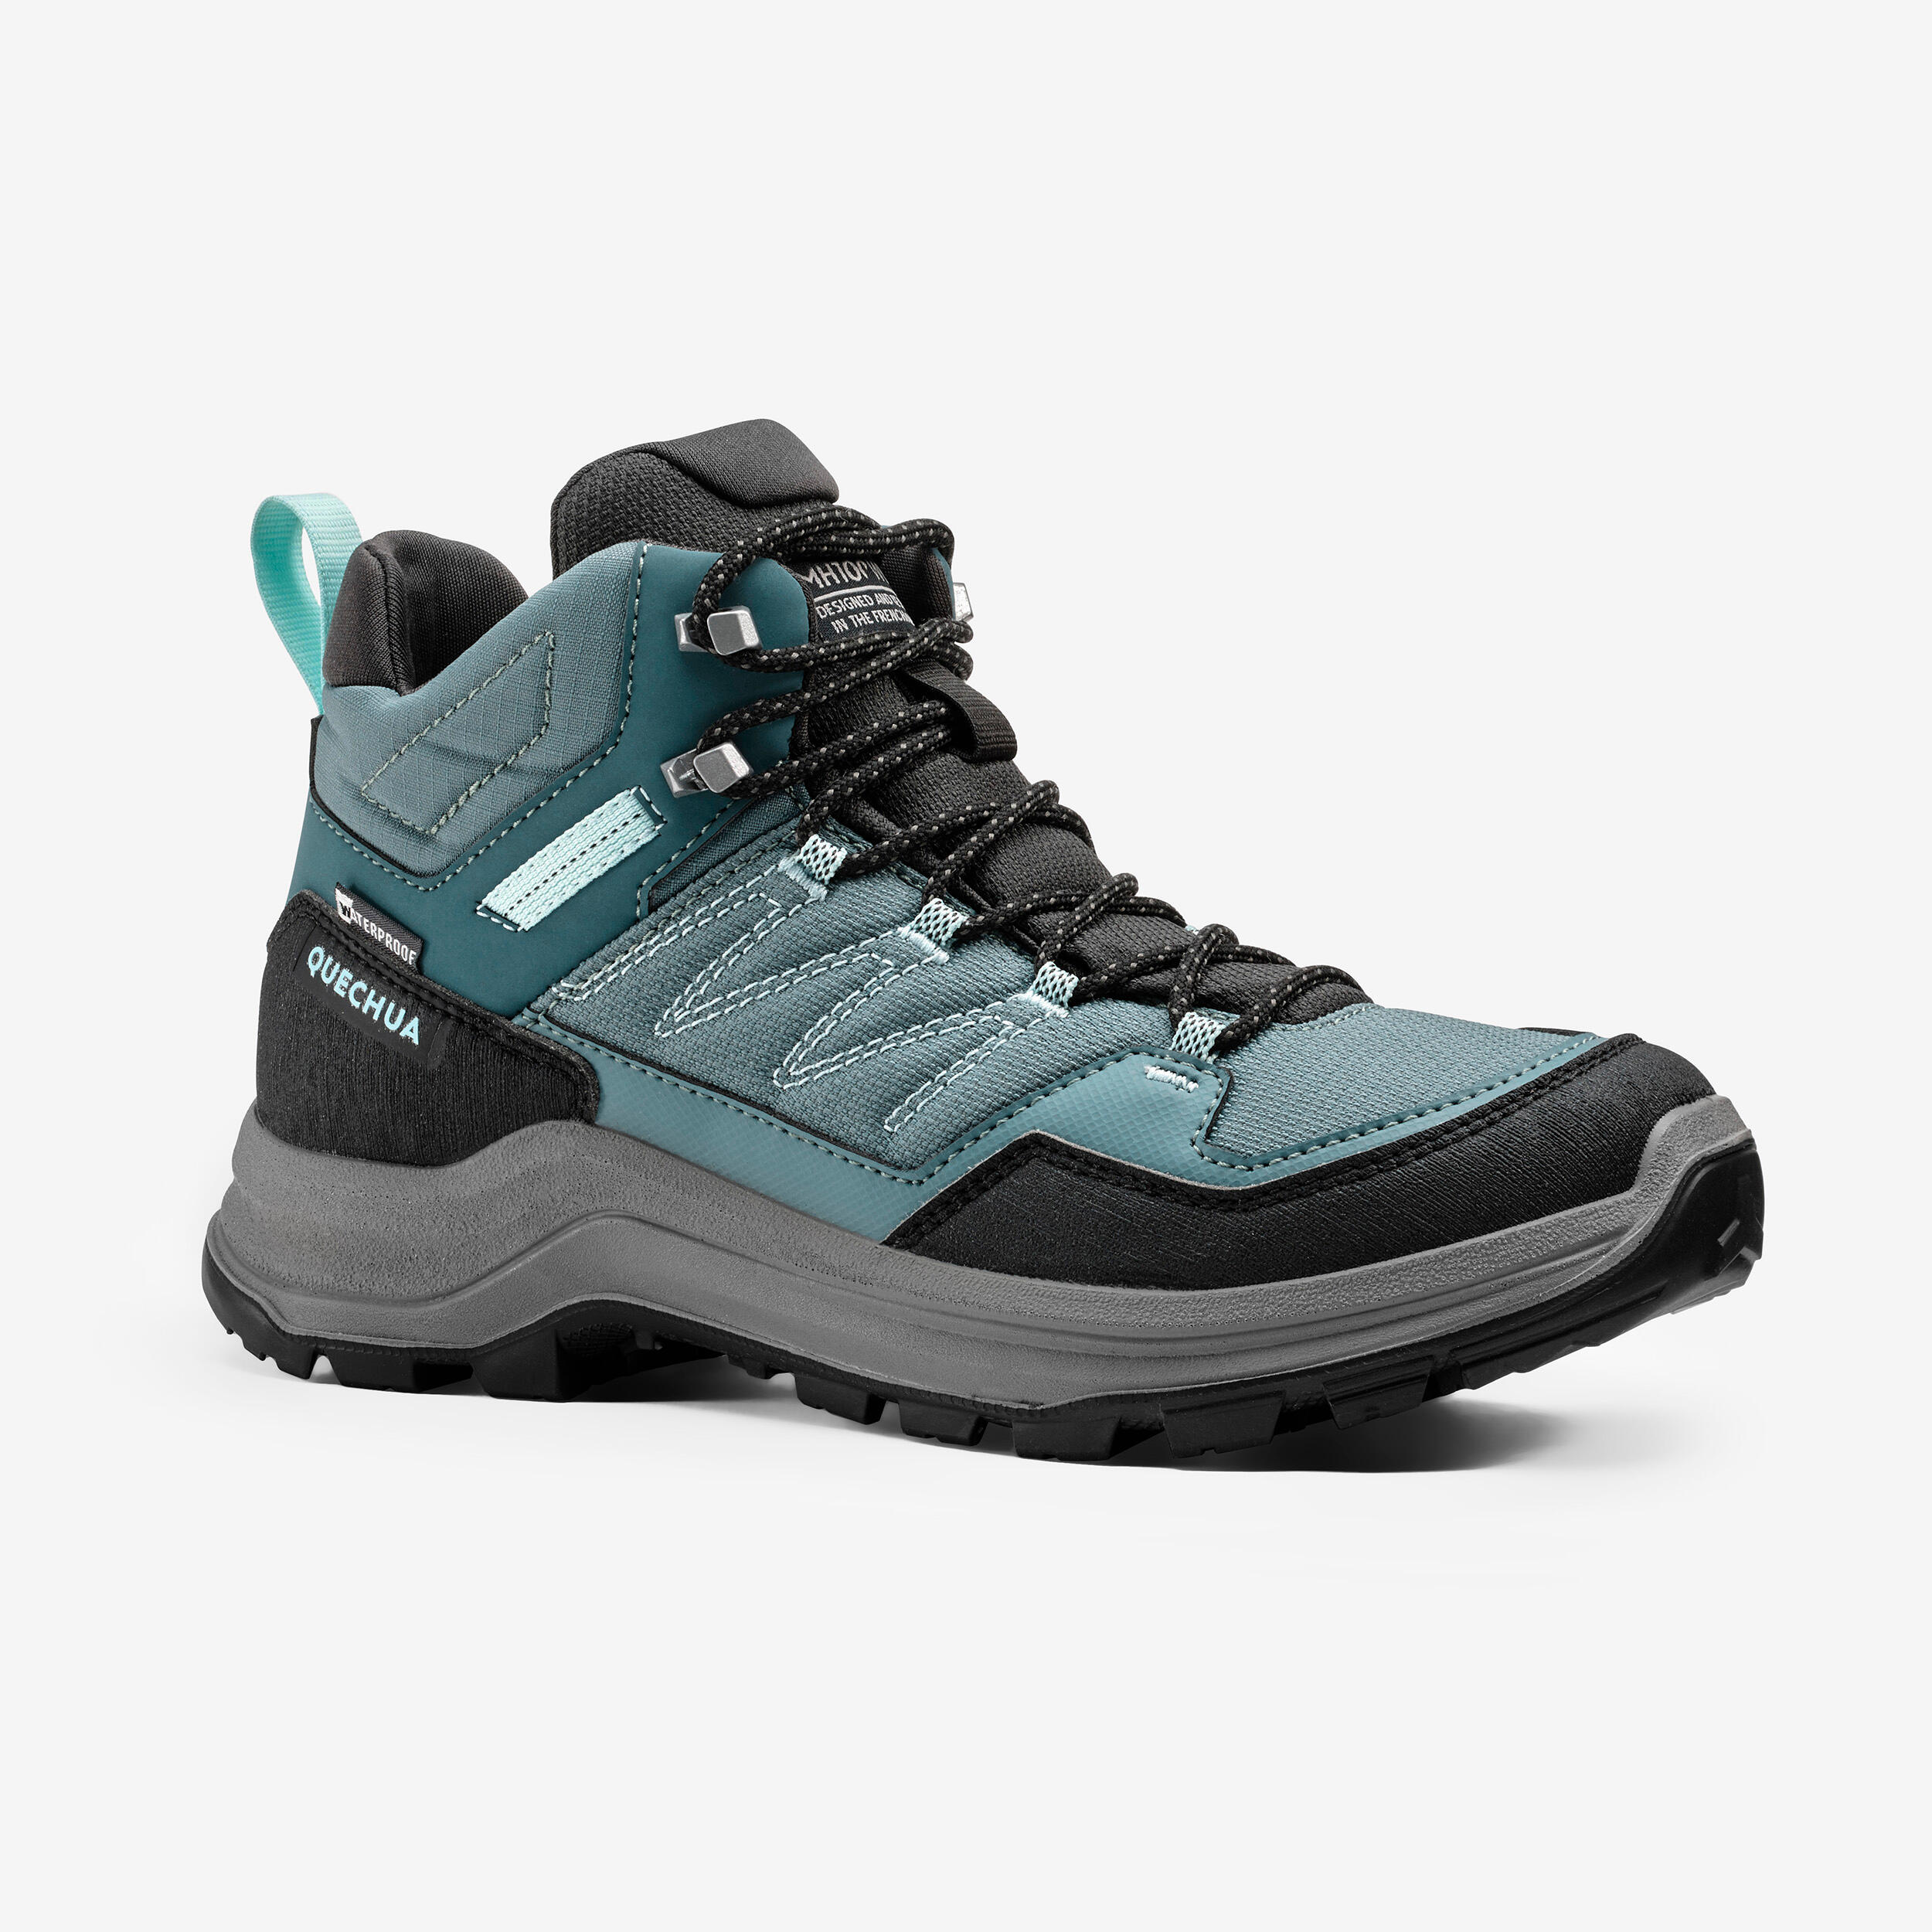 QUECHUA Women’s waterproof mountain walking boots - MH100 Mid - Green